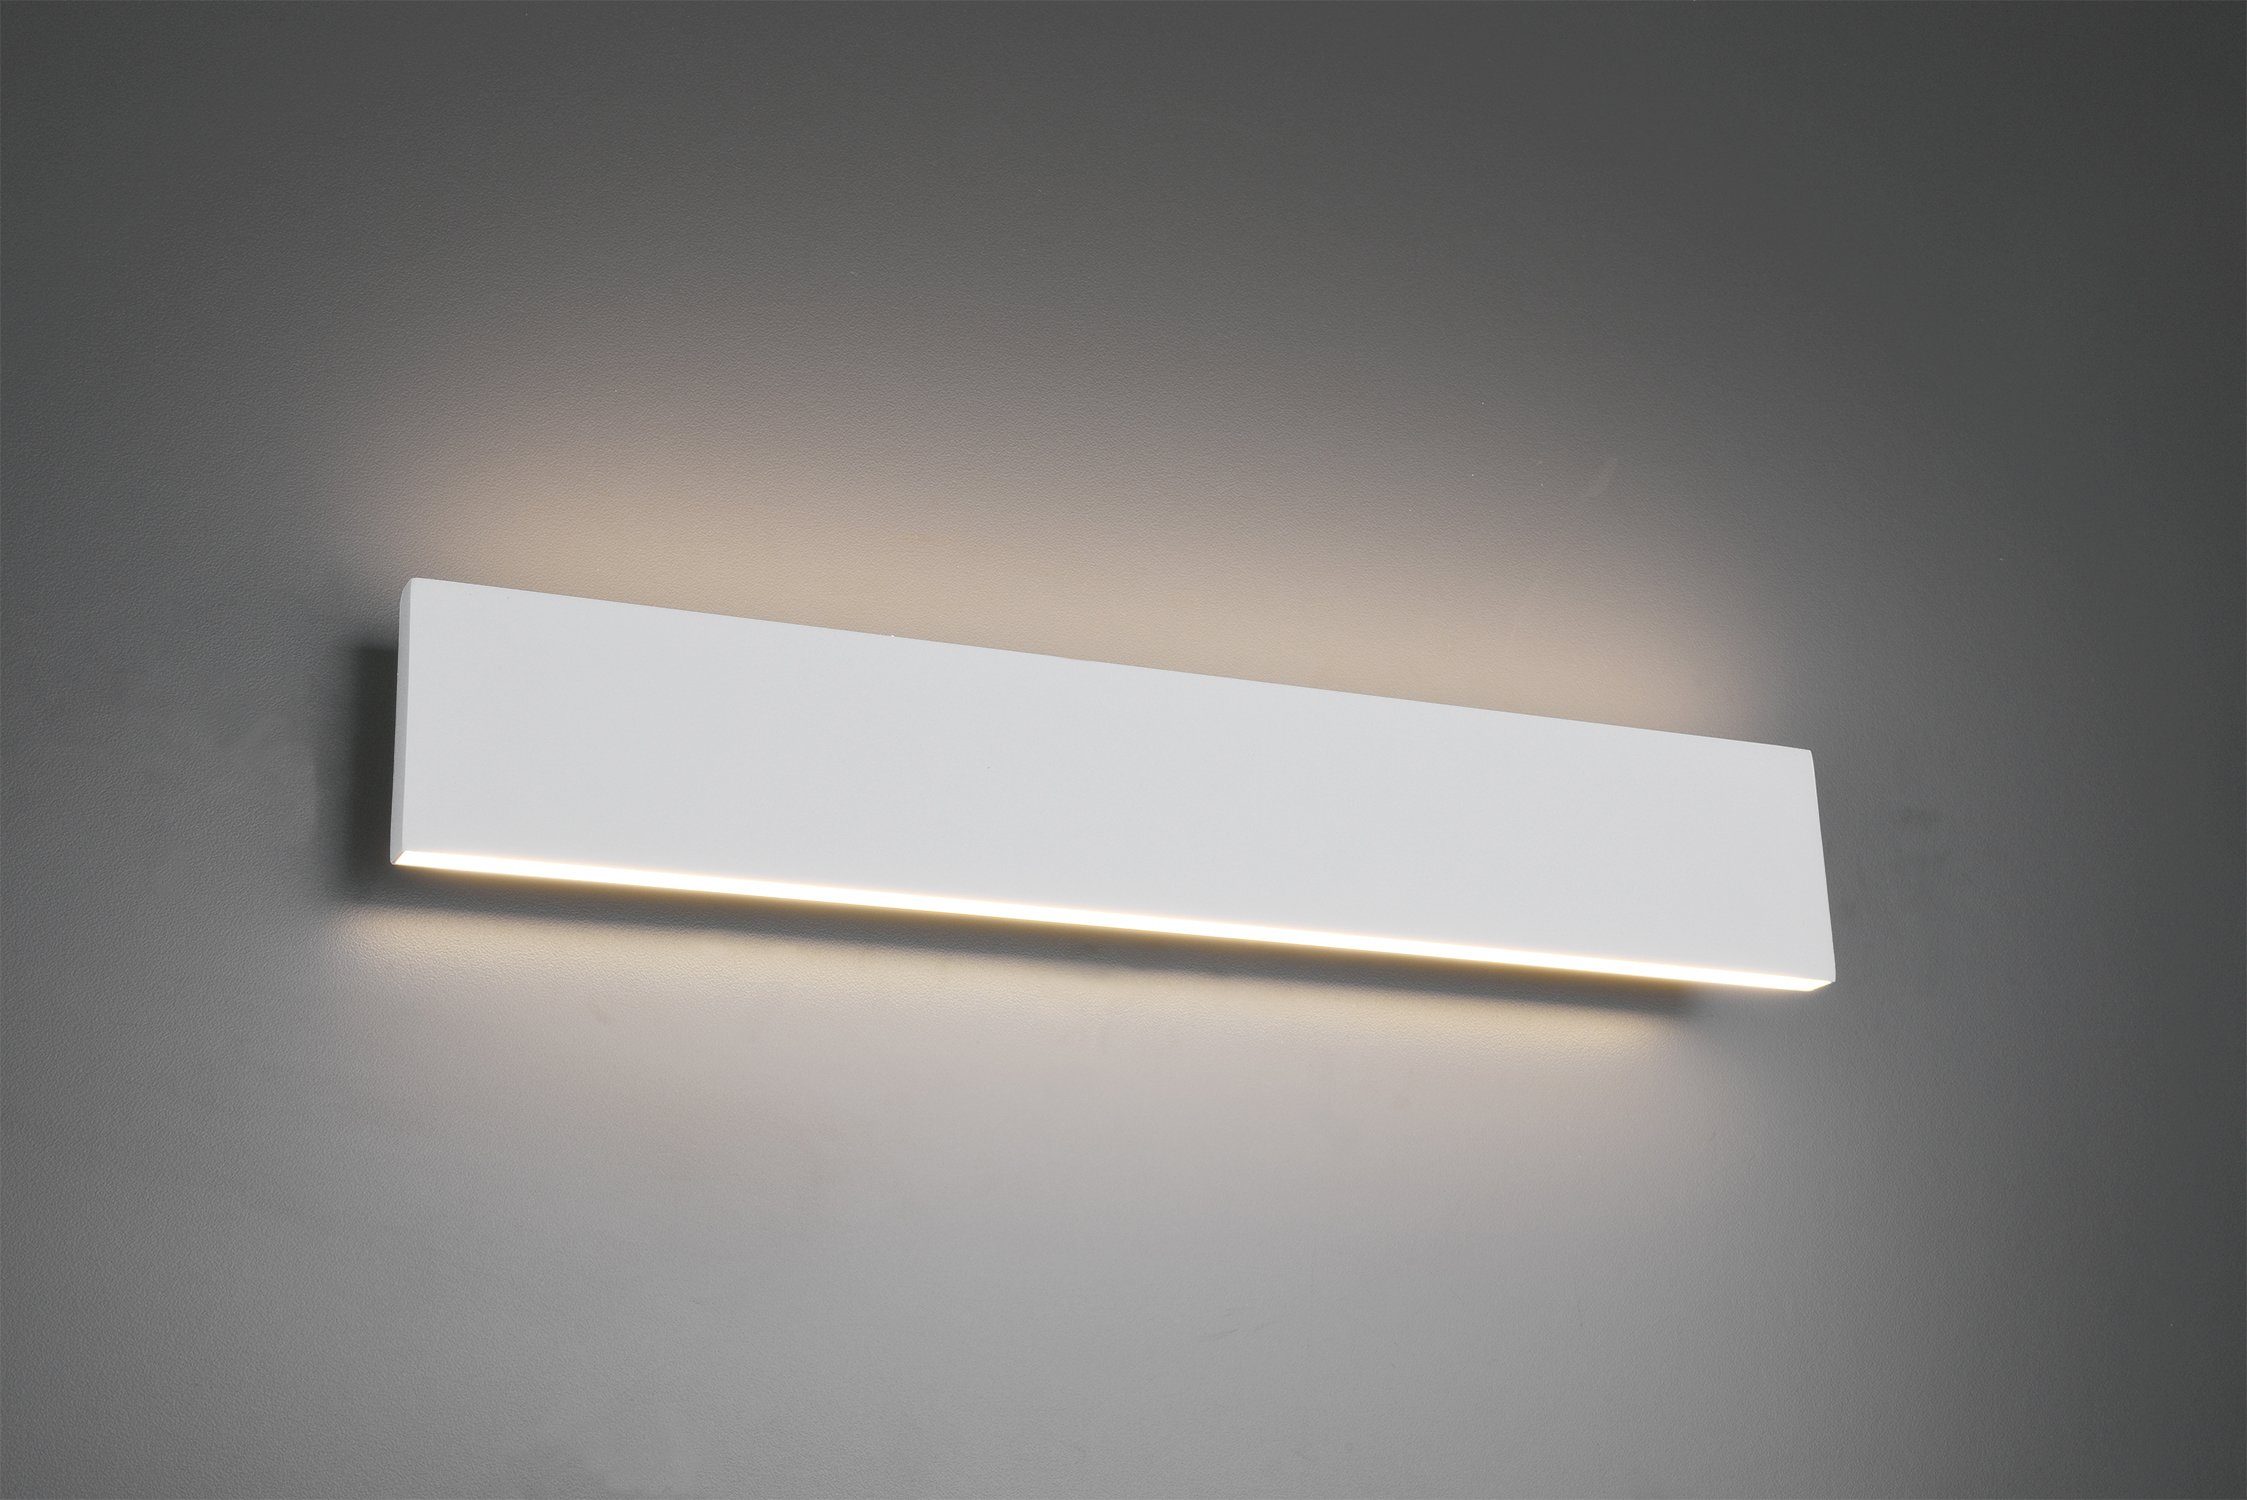 up-and-down-Beleuchtung, mit Leuchten 1000 über fest LED Wandschalter, Wandleuchte Warmweiß, Concha, Lumen integriert, dimmbar LED 2x TRIO